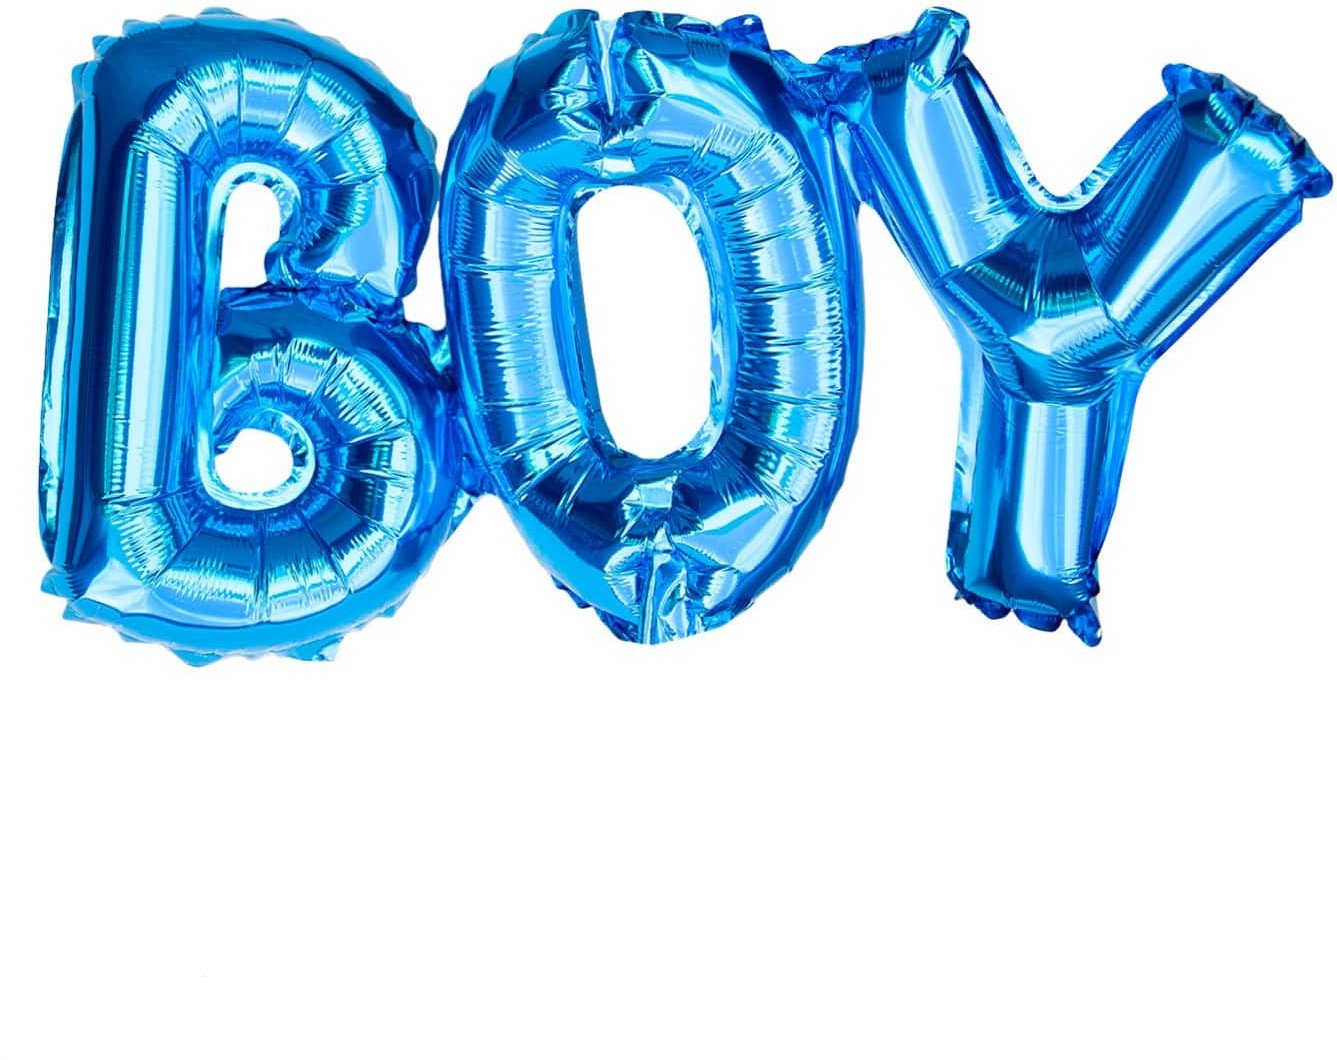 Folien Luftballon Boy Schriftzug Folienballon für Baby Shower Party Geburt Junge - blau